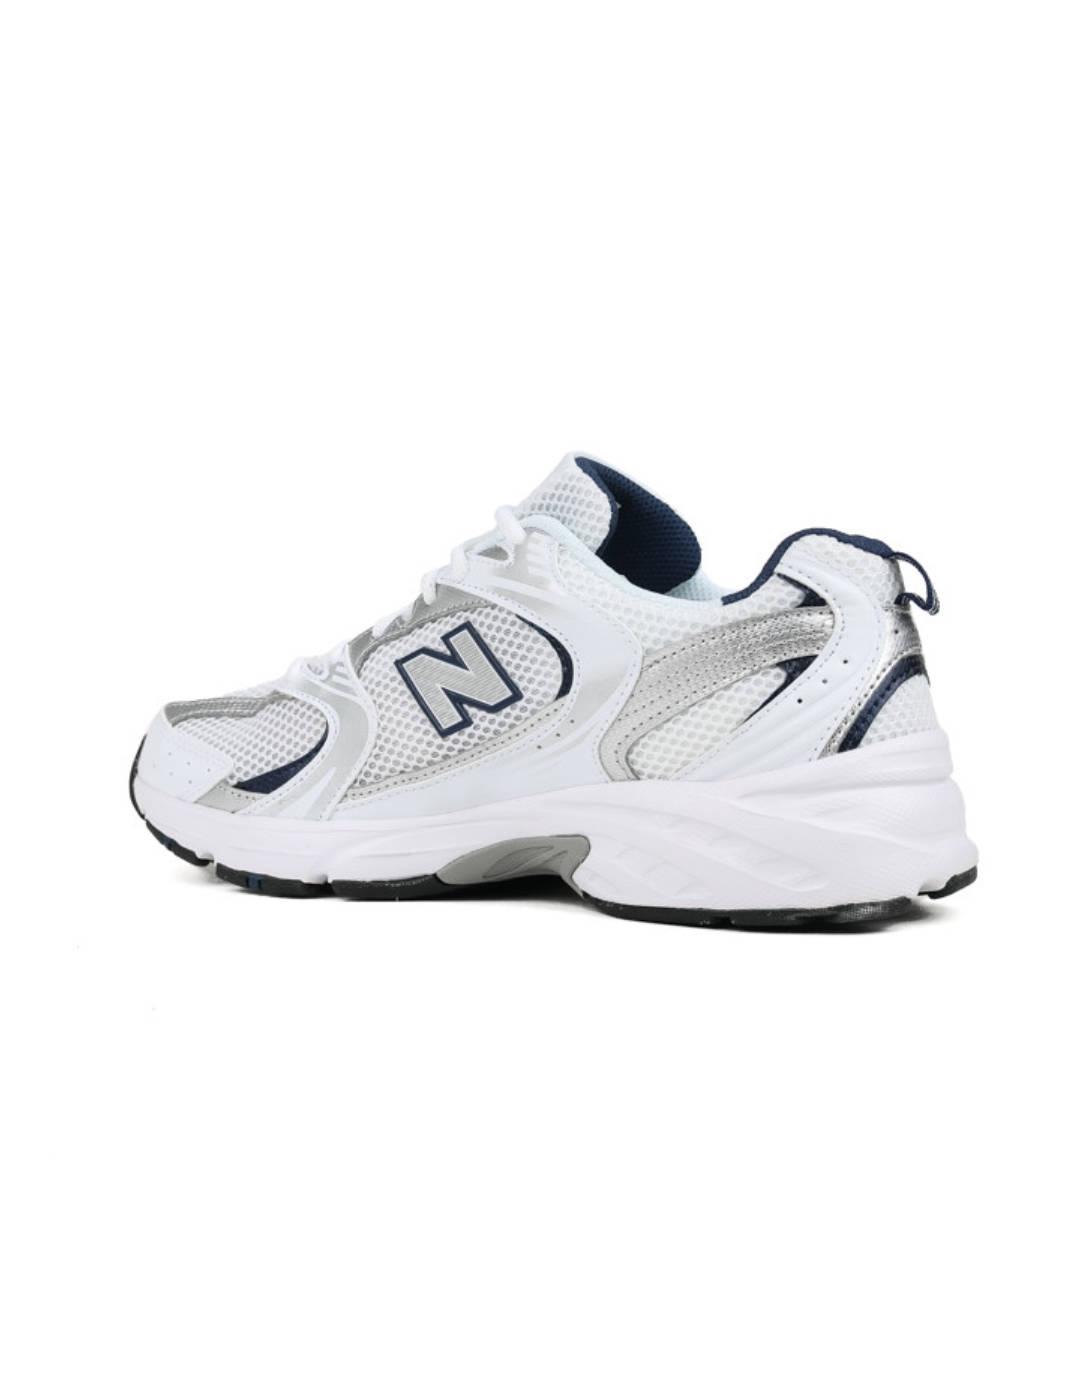 Zapatillas New Balance MR530SG blancas